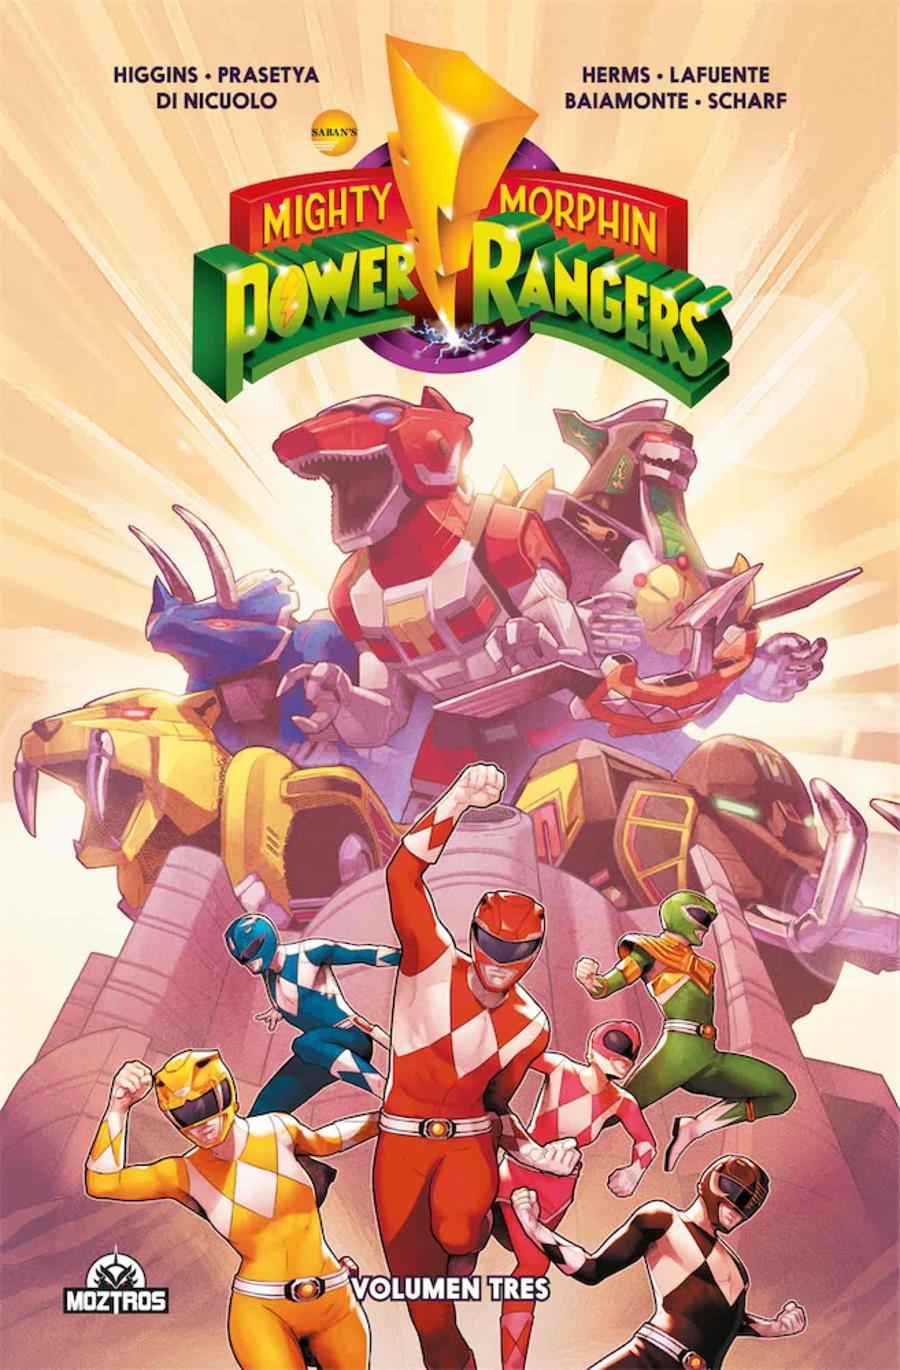 Power Rangers Vol. 3 | N0822-MOZ02 | Kyle Higgins, Giuseppe Cafaro | Terra de Còmic - Tu tienda de cómics online especializada en cómics, manga y merchandising